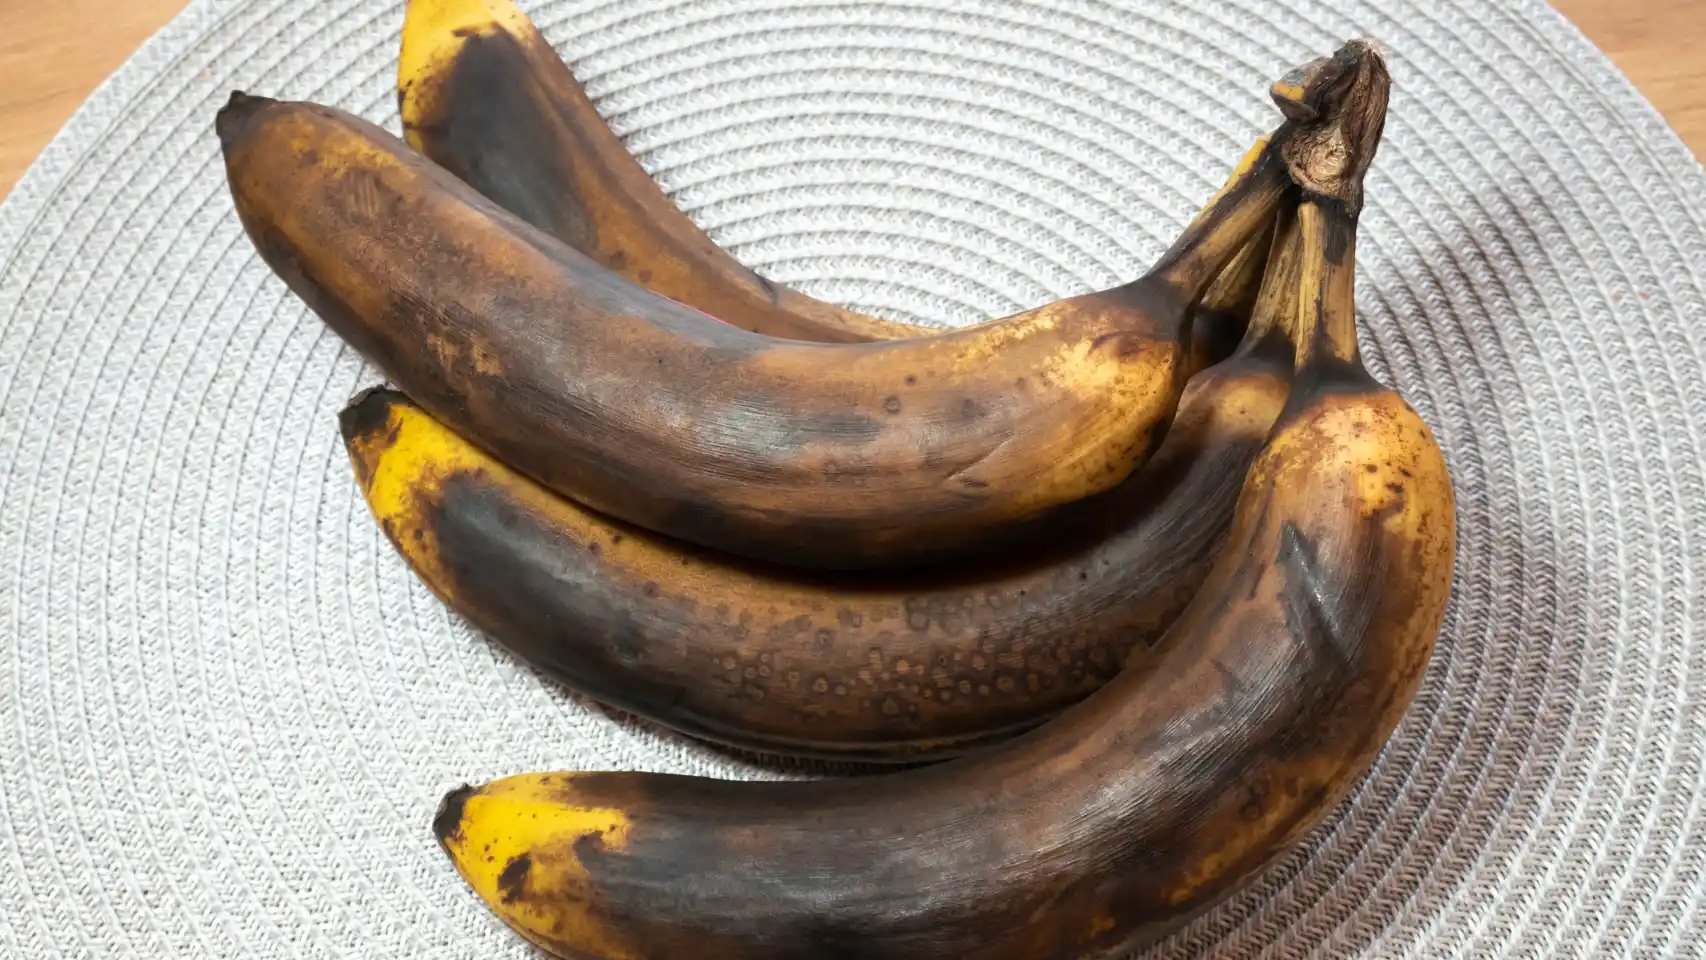 Plátanos muy maduros